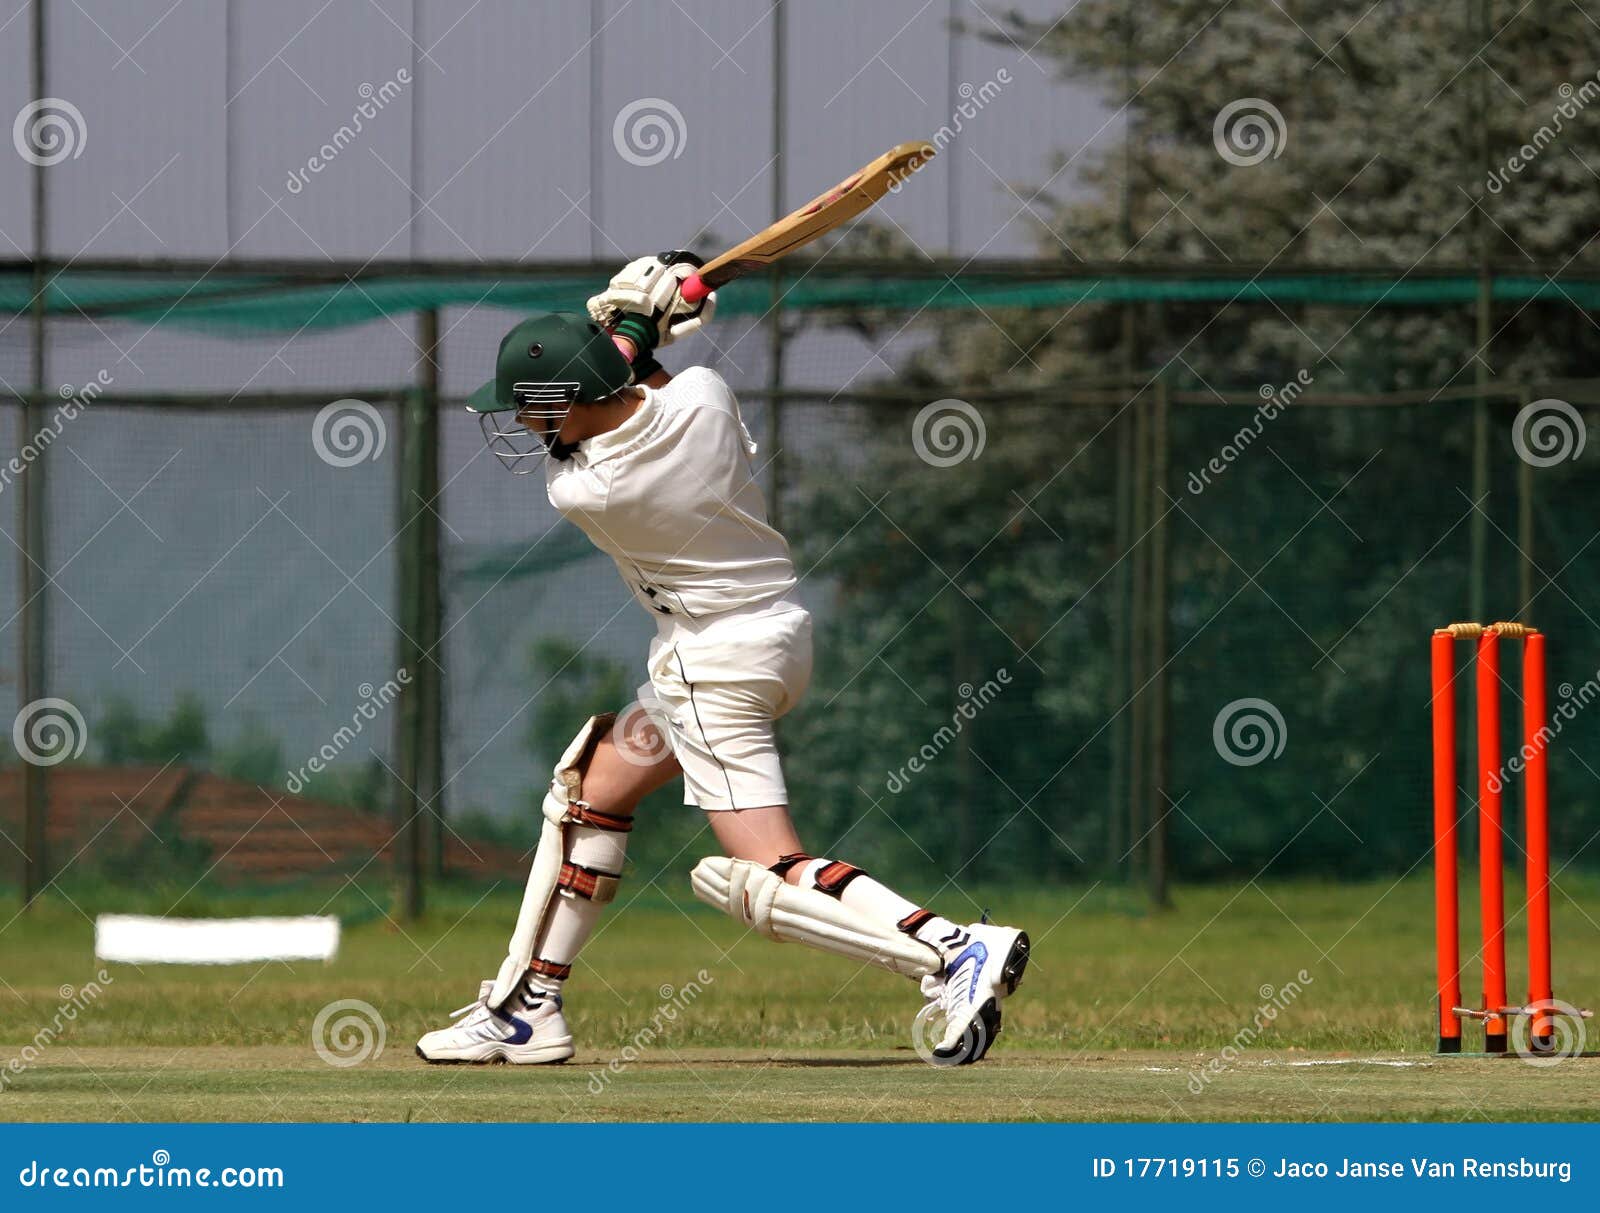 1292 Cricket Tattoo Images Stock Photos  Vectors  Shutterstock